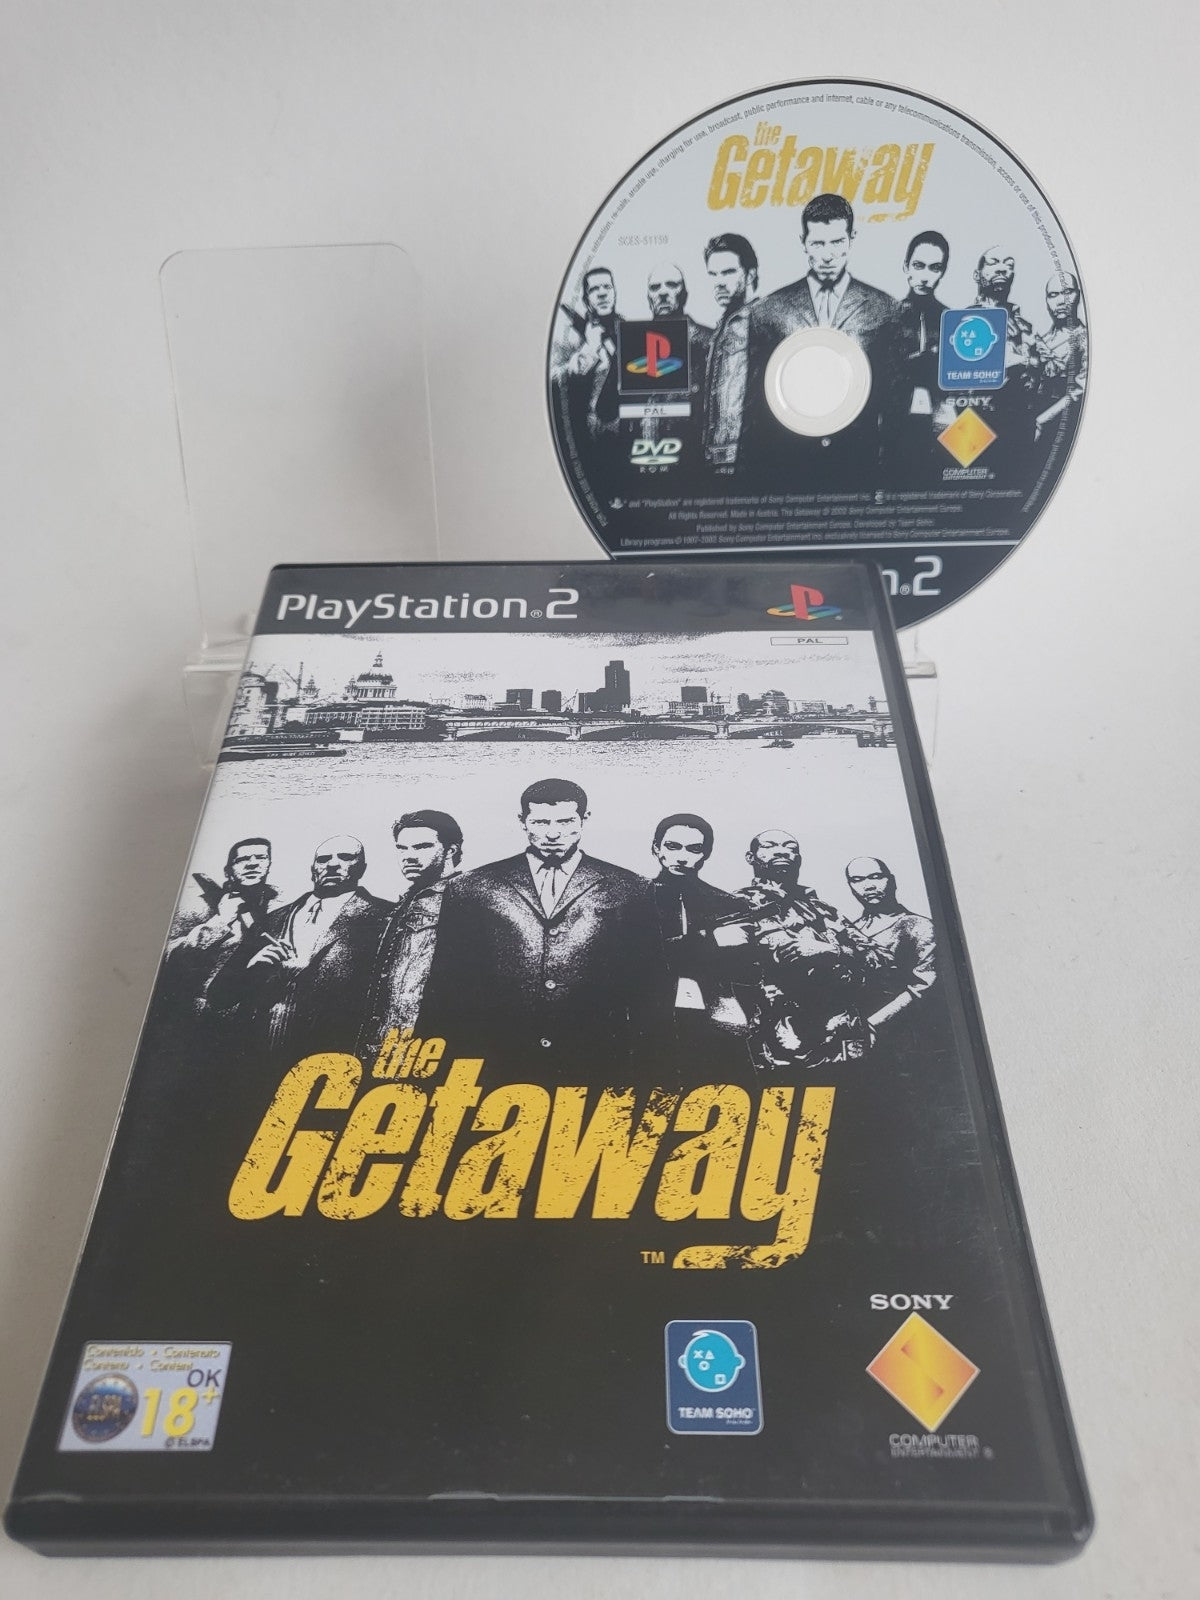 The Getaway Playstation 2